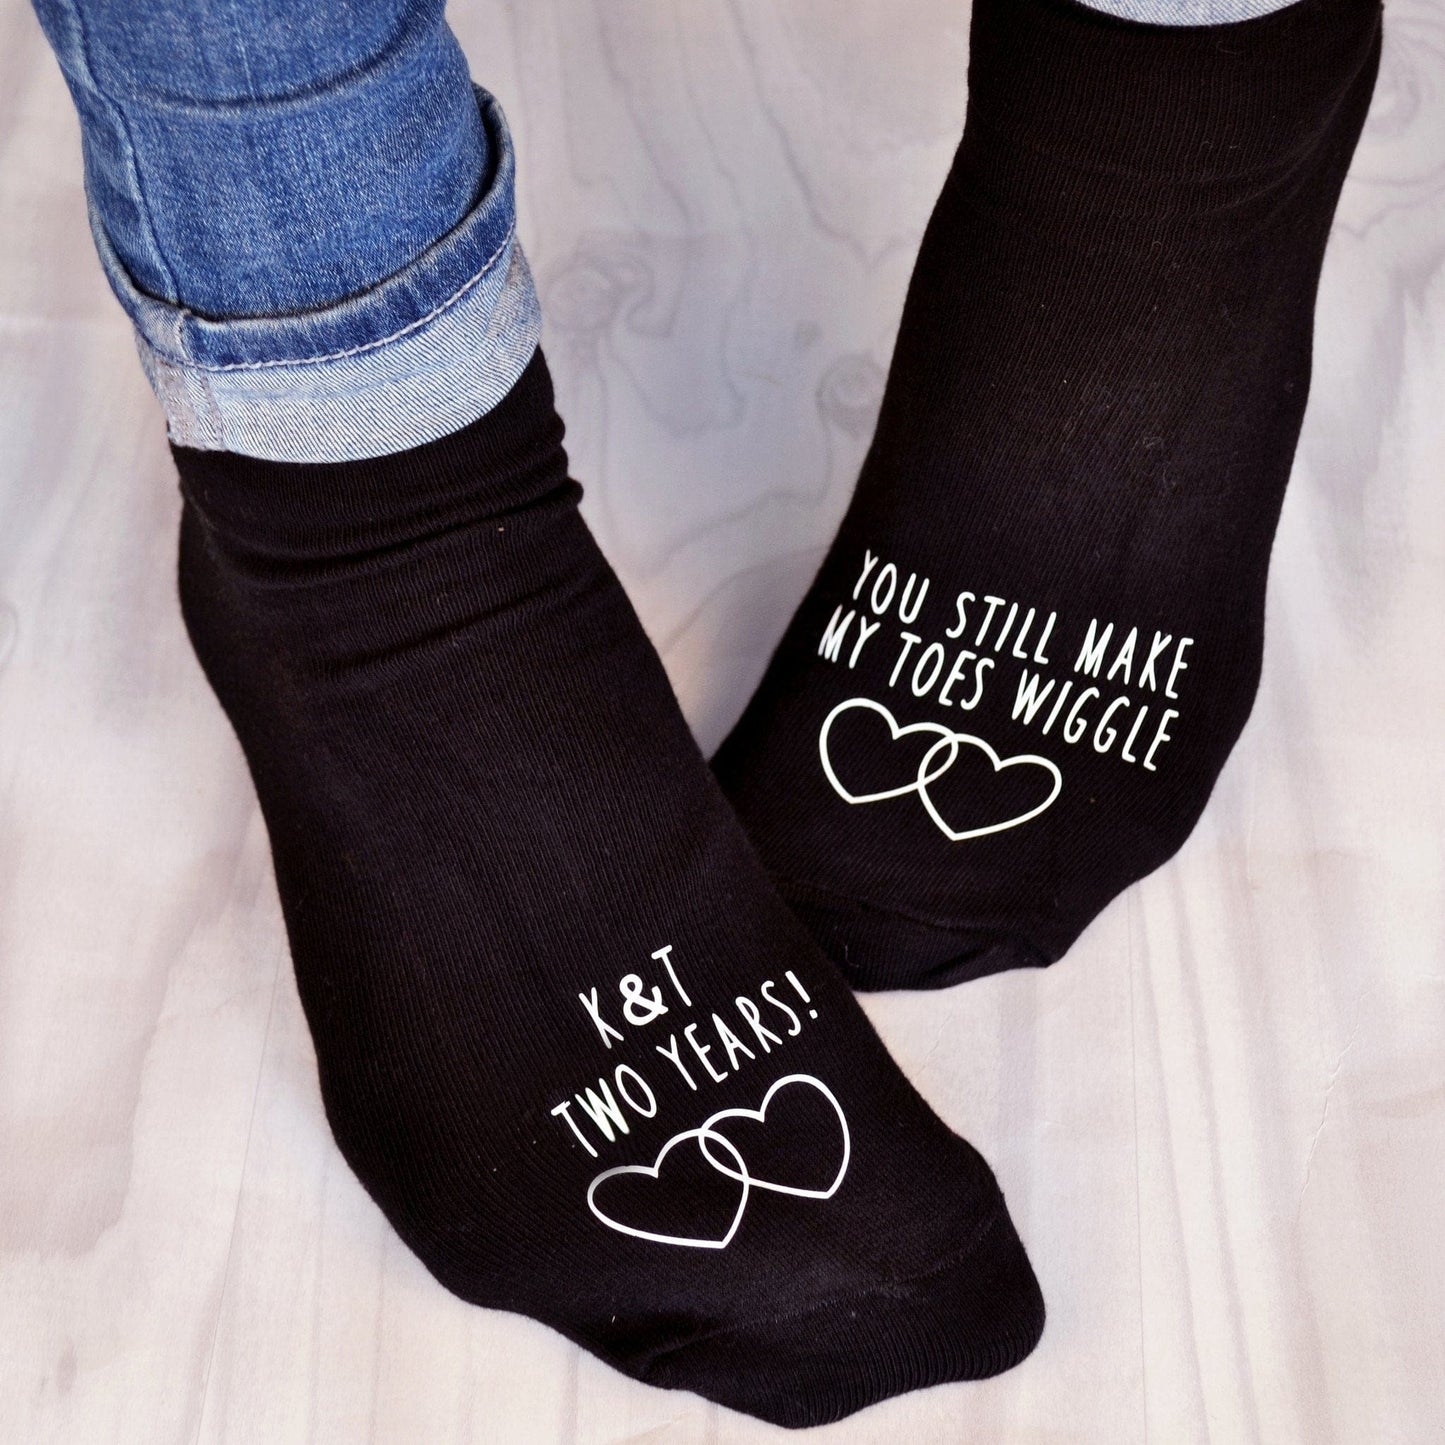 Personalised Gift Socks - You Make My Toes Wiggle, Socks, - ALPHS 